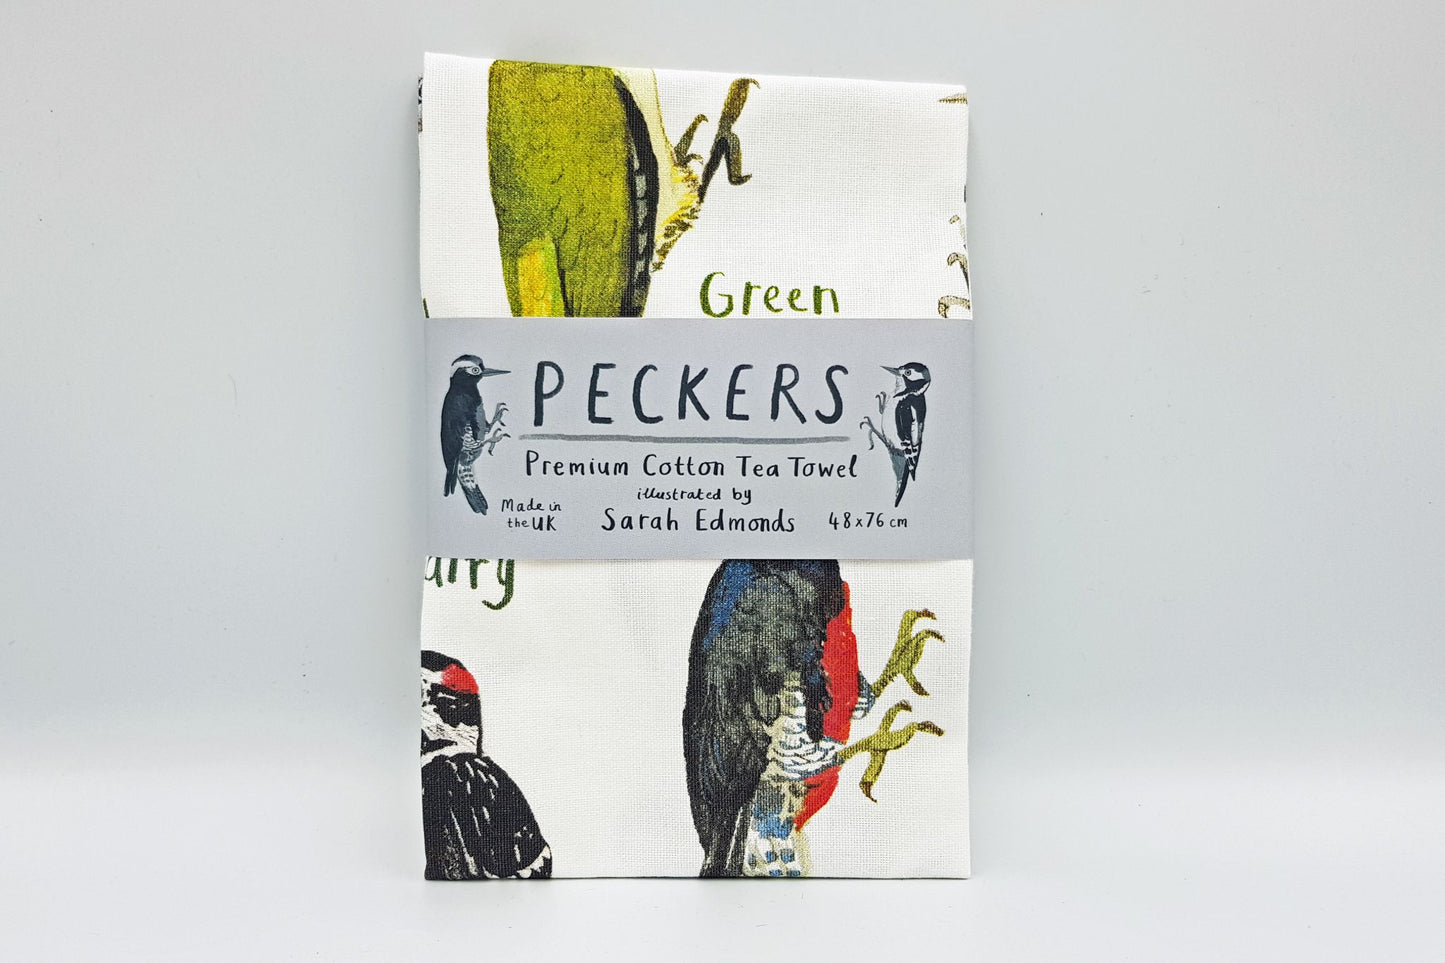 Peckers Tea Towel